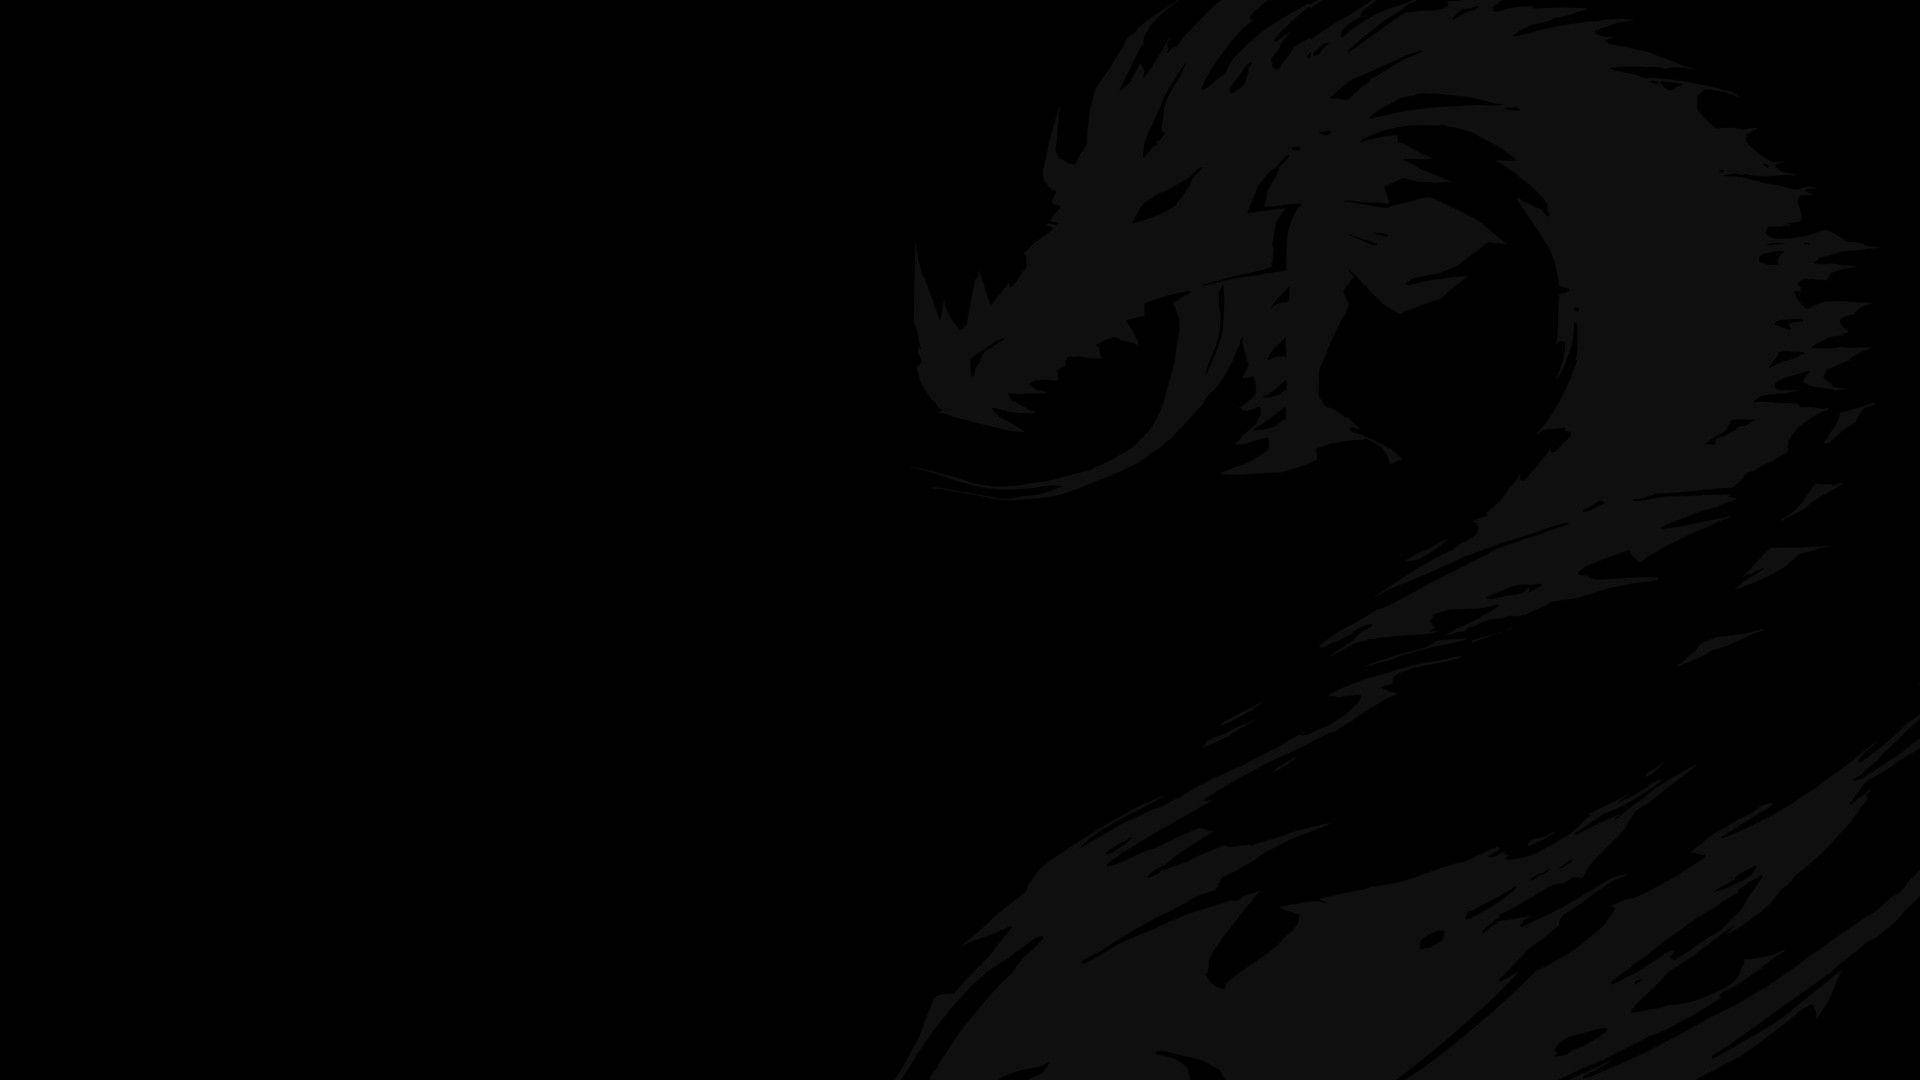 Solid Black 4k Dragon In Darkness Background